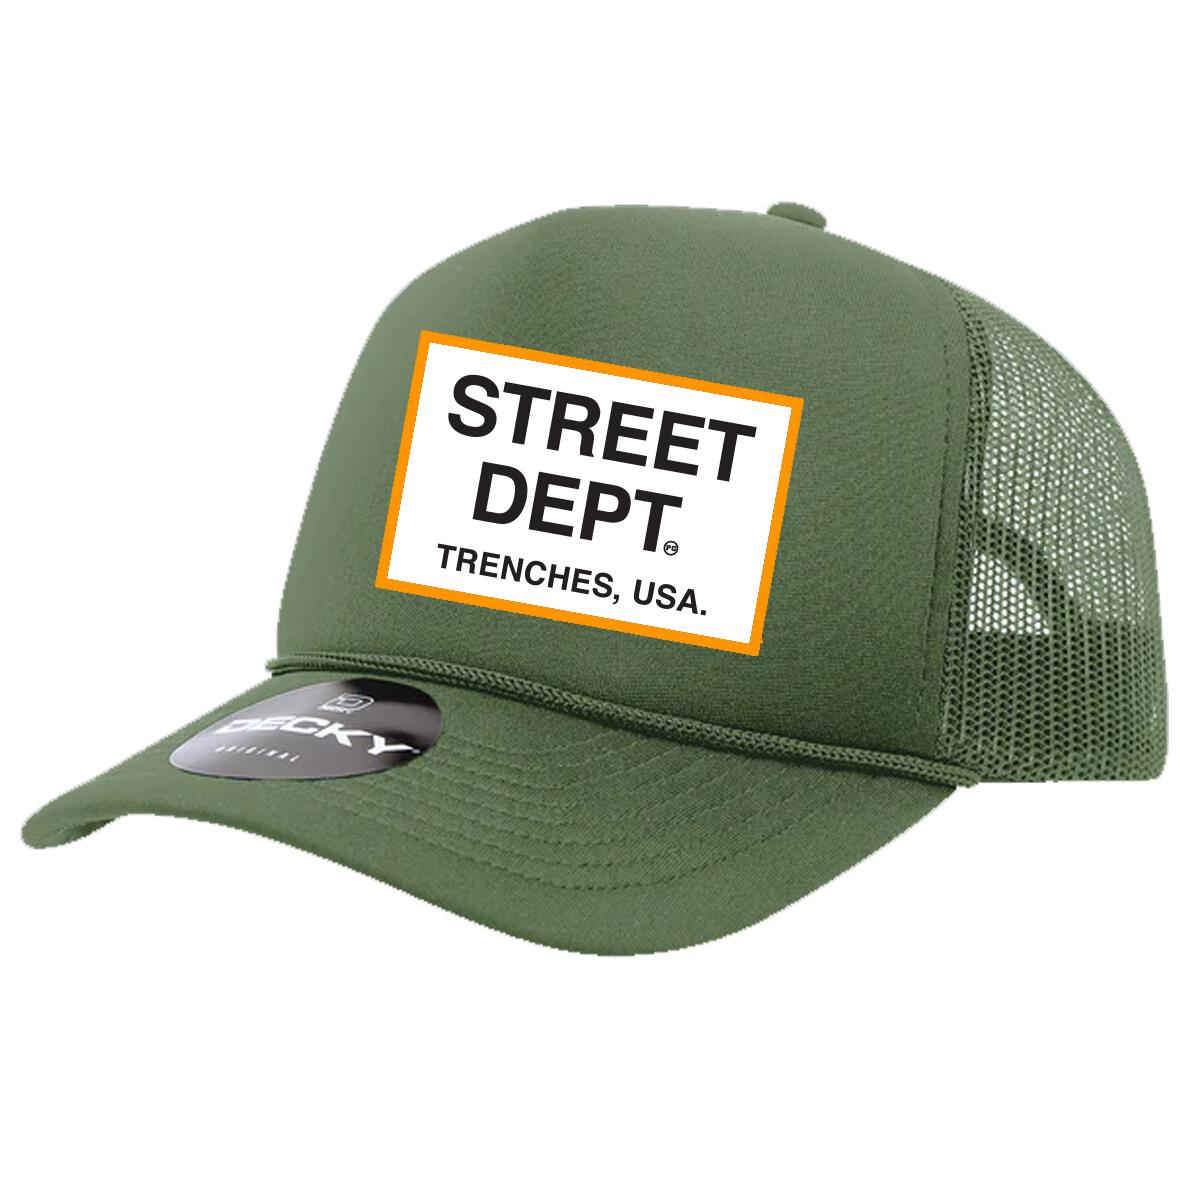 Street Dept Trucker Hat - Olive/Orange